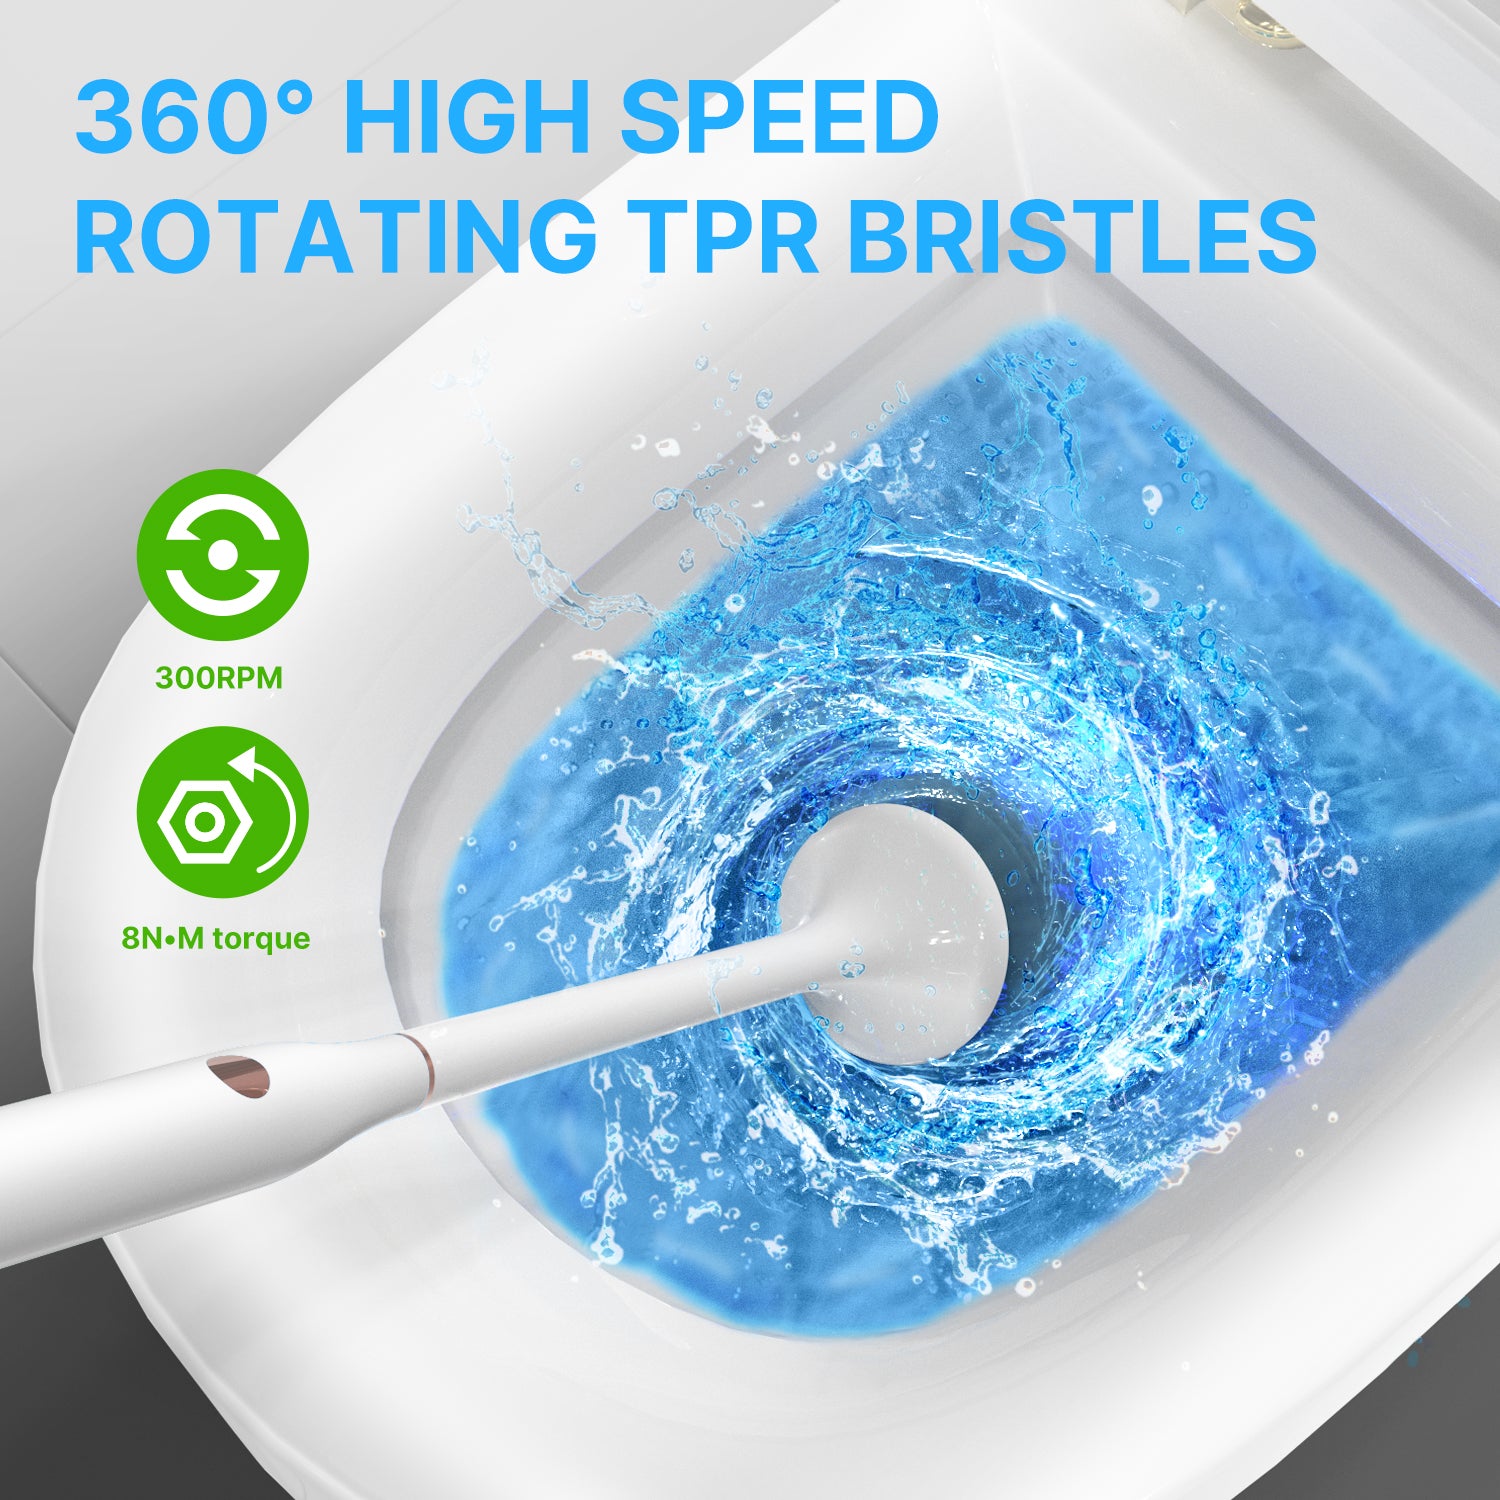 Reynera Pro Poly Fiber Toilet Brush in the Toilet Brushes